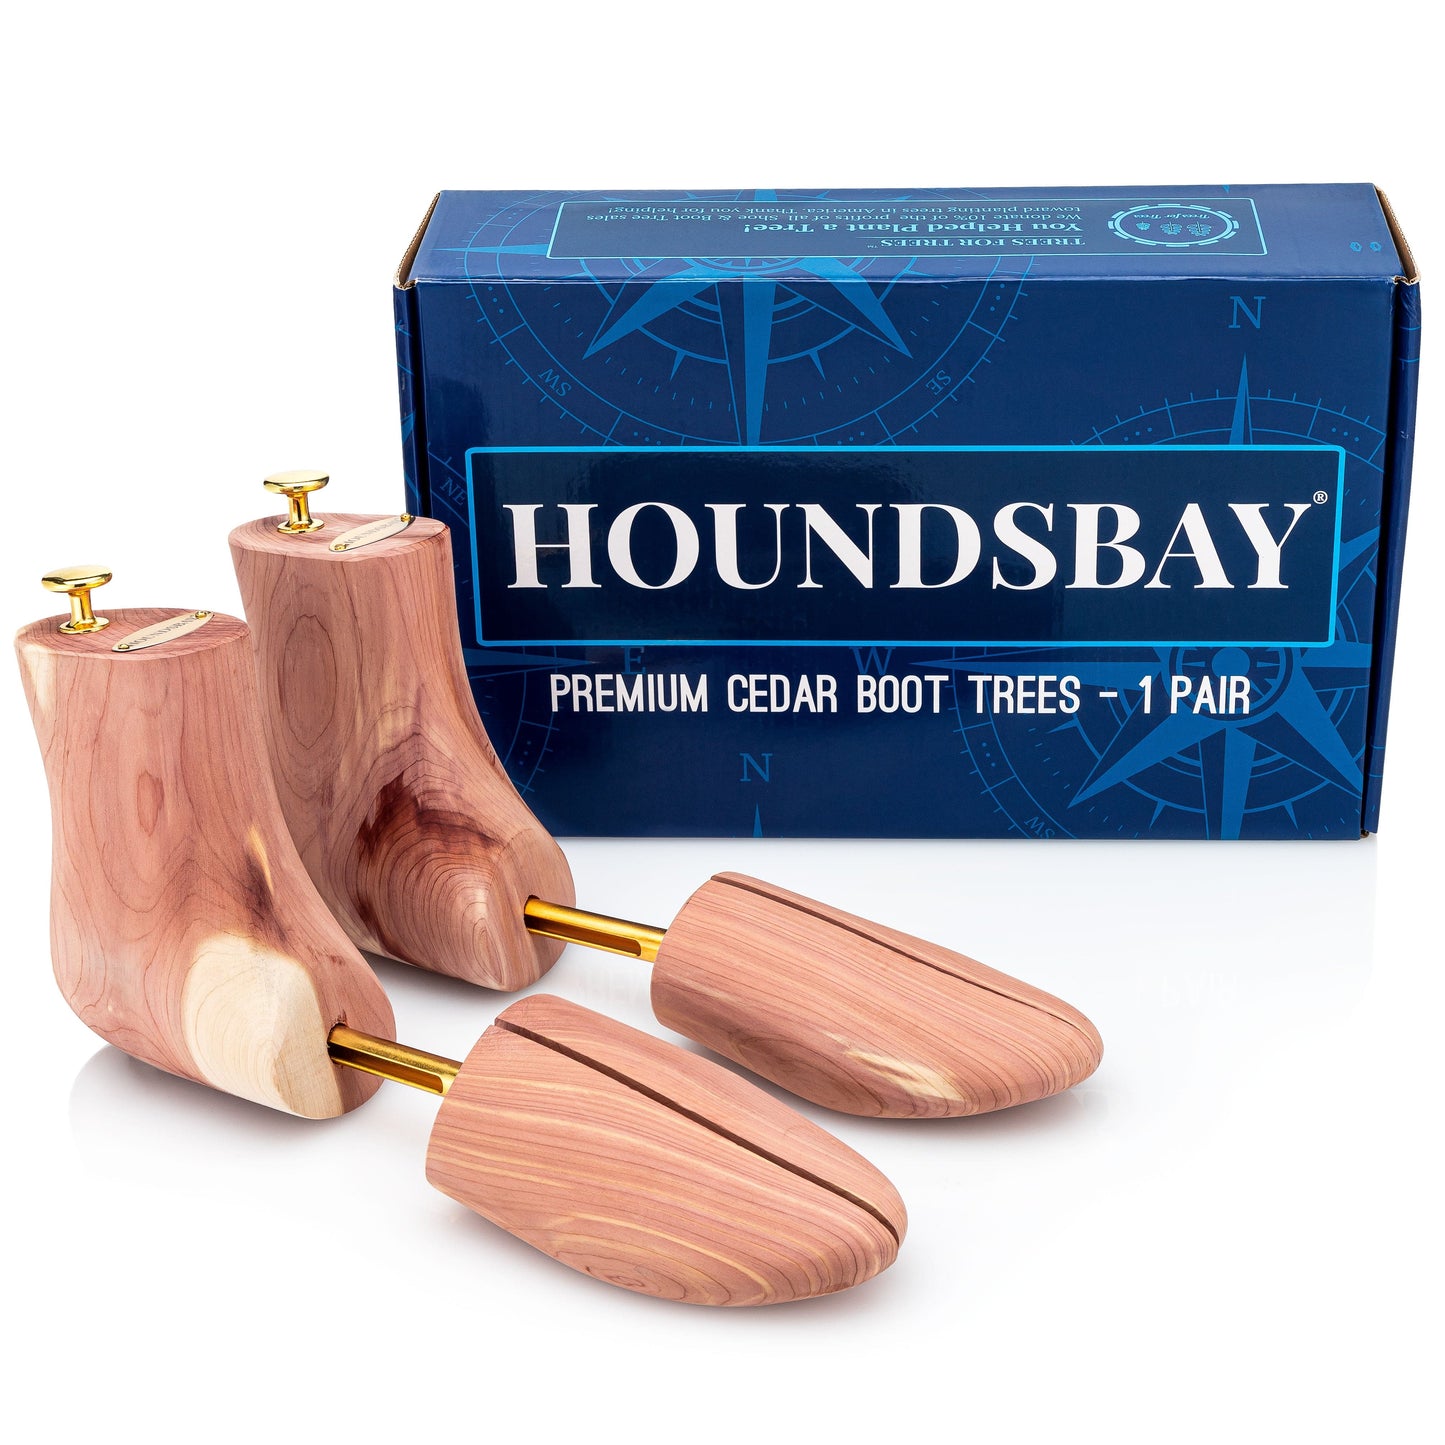 HOUNDSBAY Cedar Boot Trees